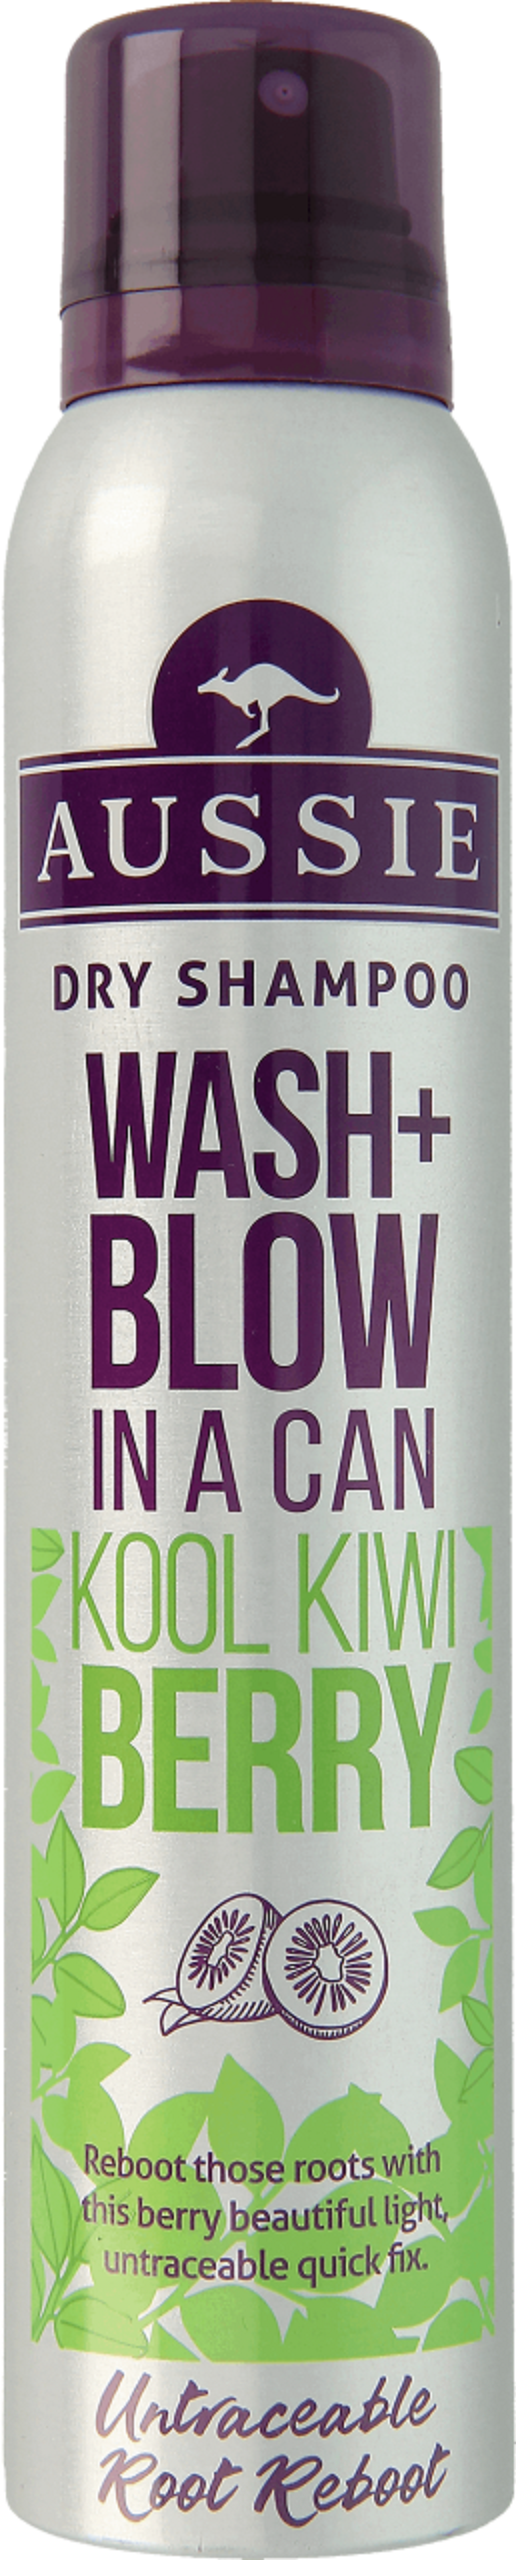 aussie wash blow in a can suchy szampon kool kiwi